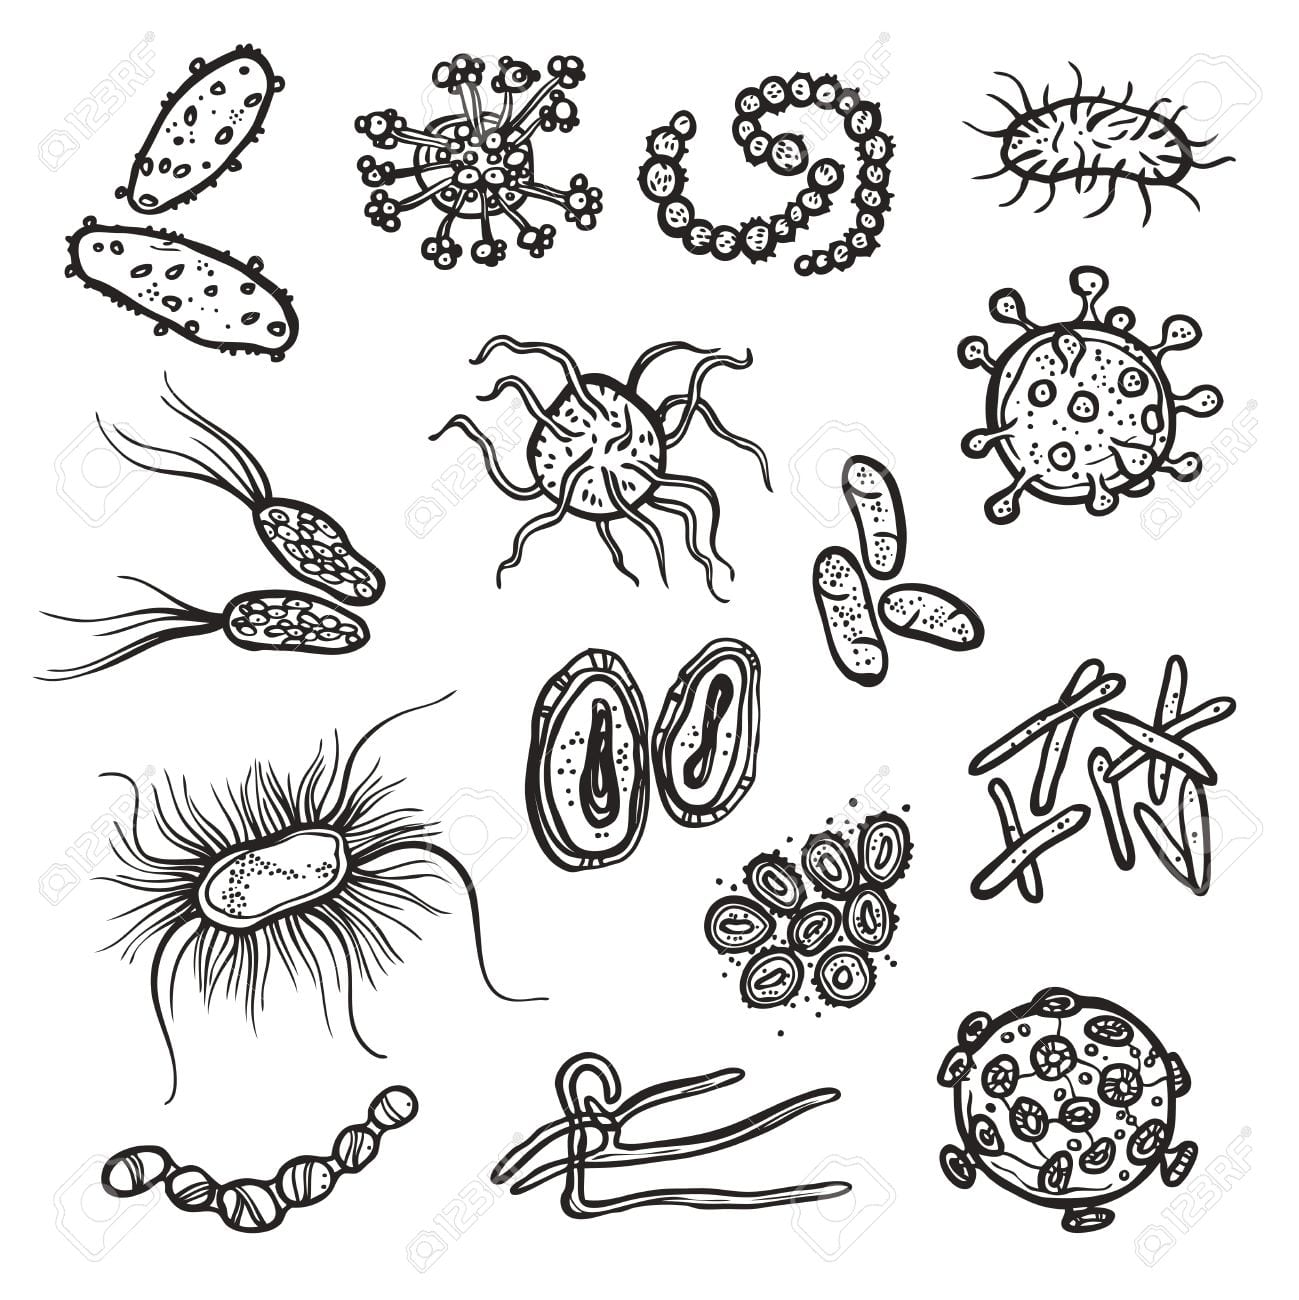 bacteria drawings